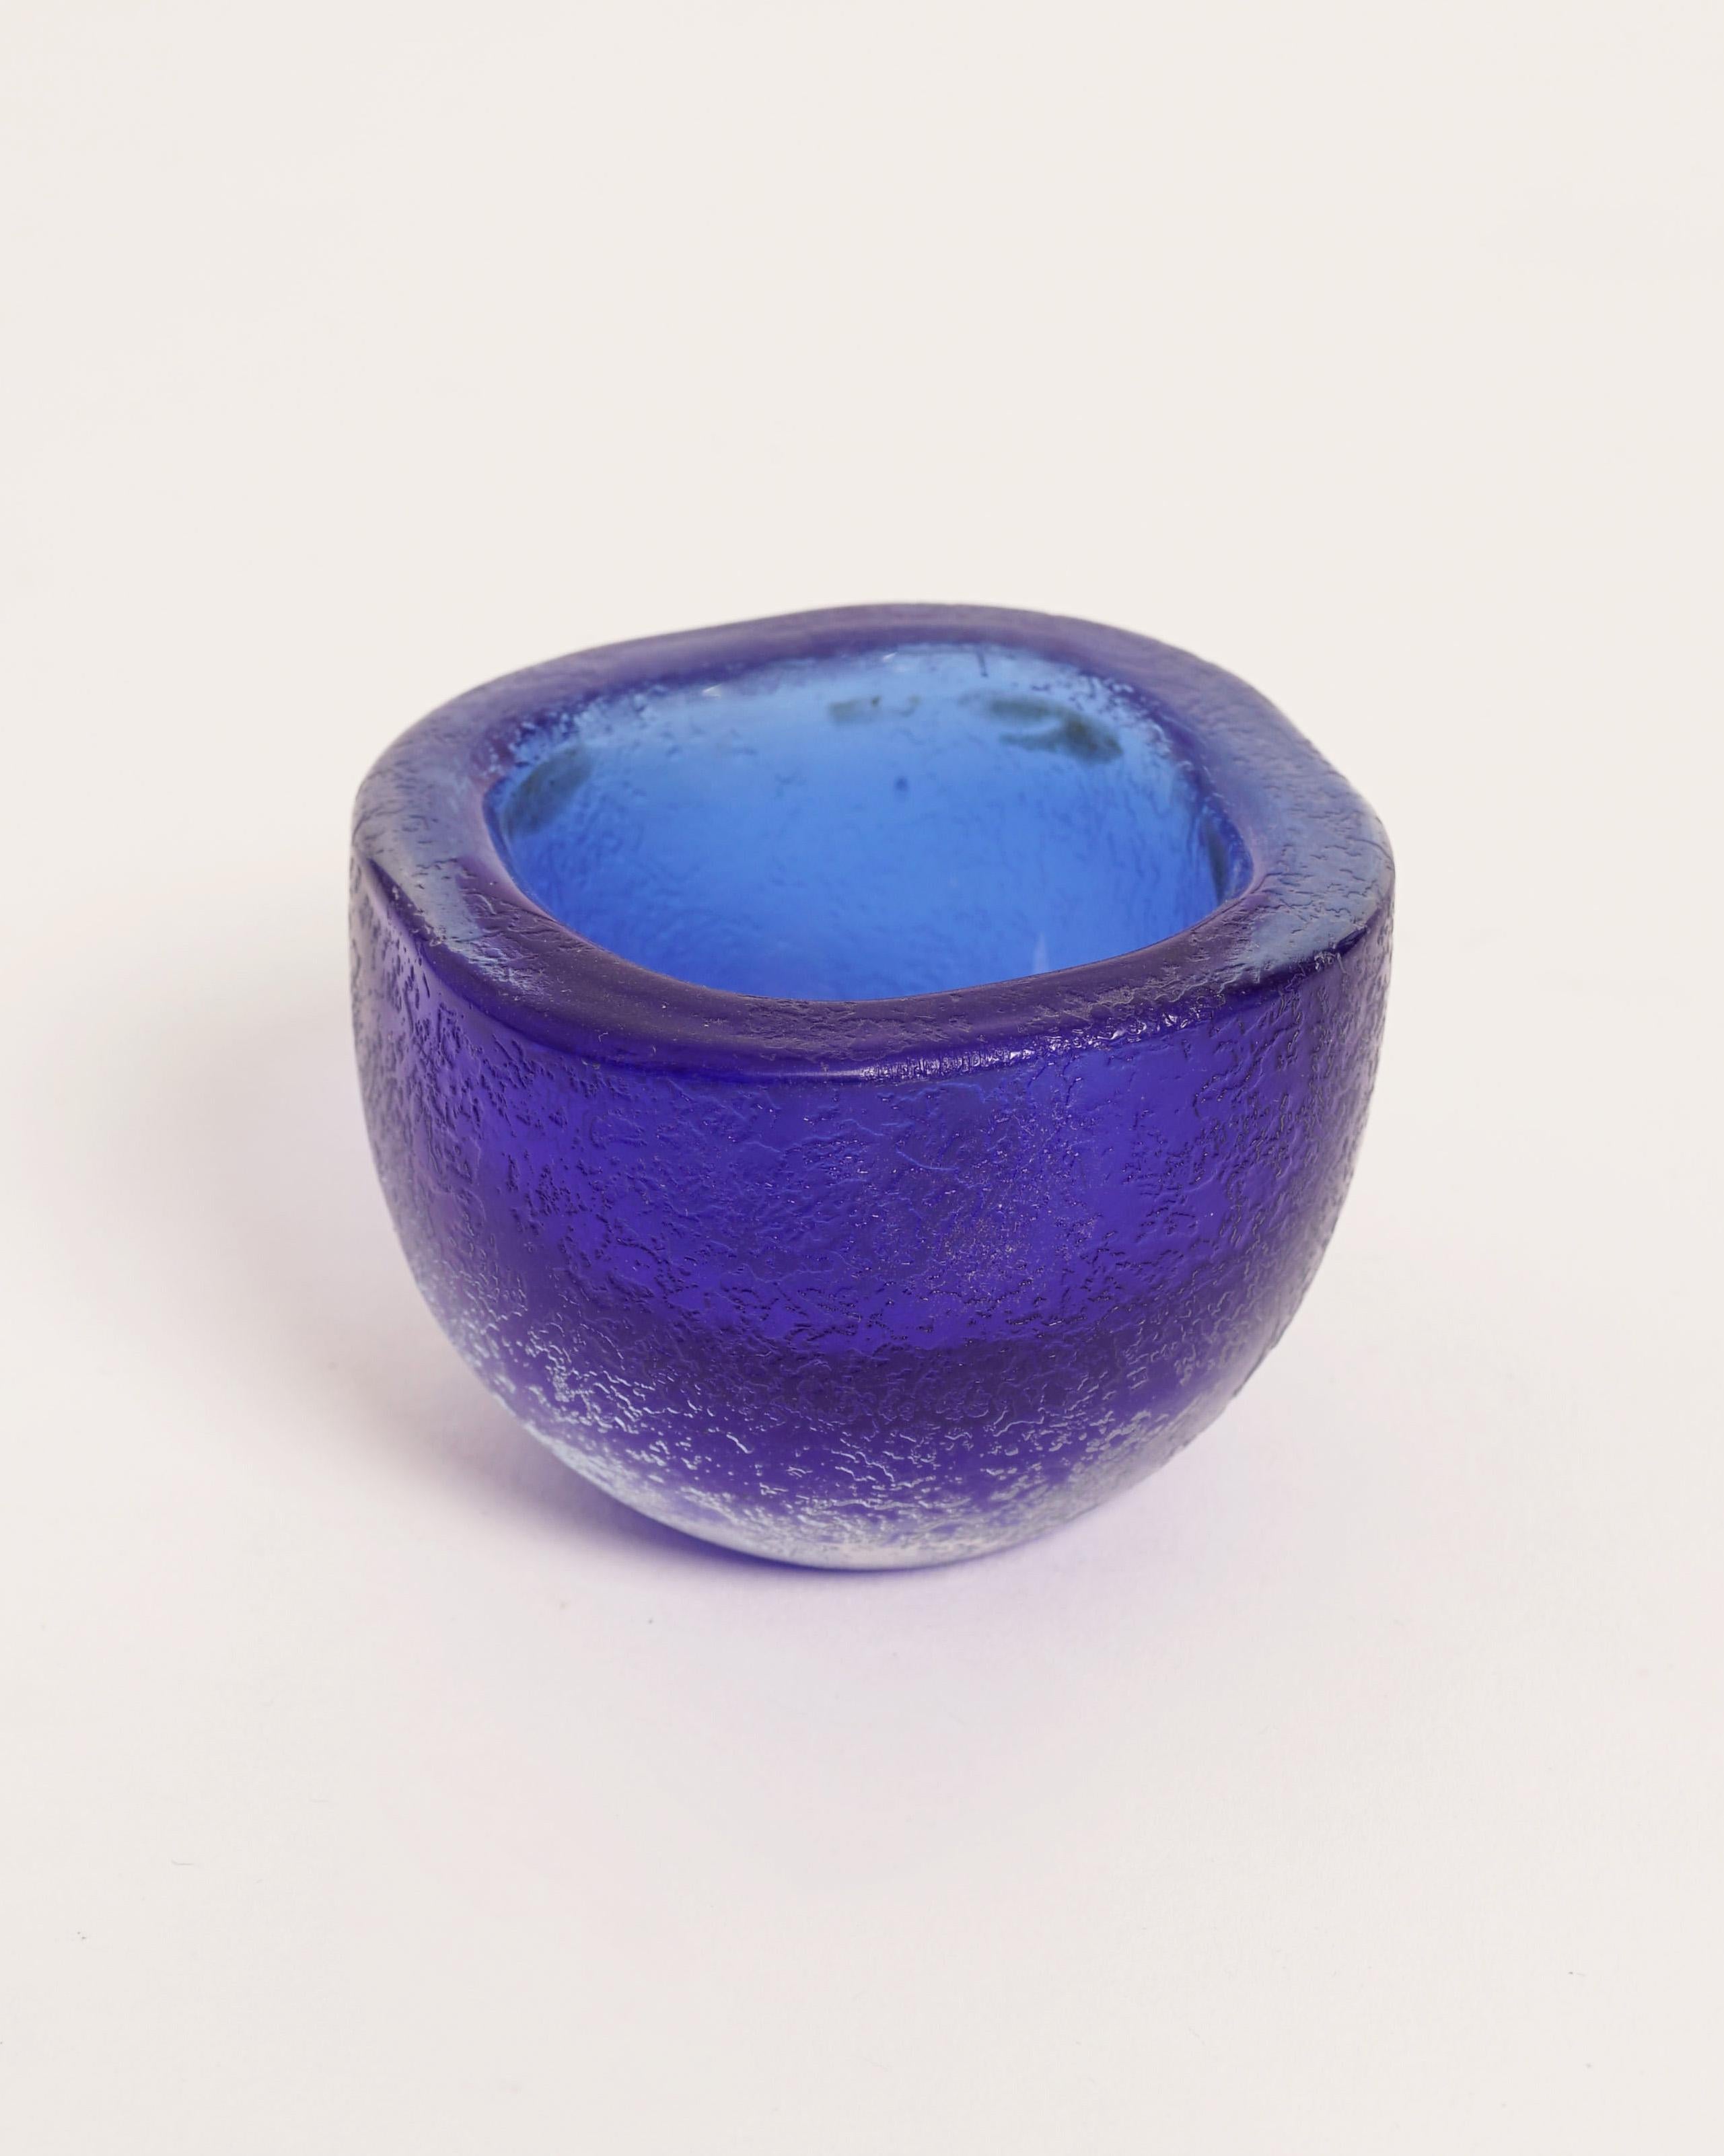 Carlo Scarpa
 'Corroso a bolicine' bowl, c. 1935
Execution: Venini & C. Cased glass, clear blue.
Signed: Venini murano (acid stamp).
Measures: H : 6 cm (2.4